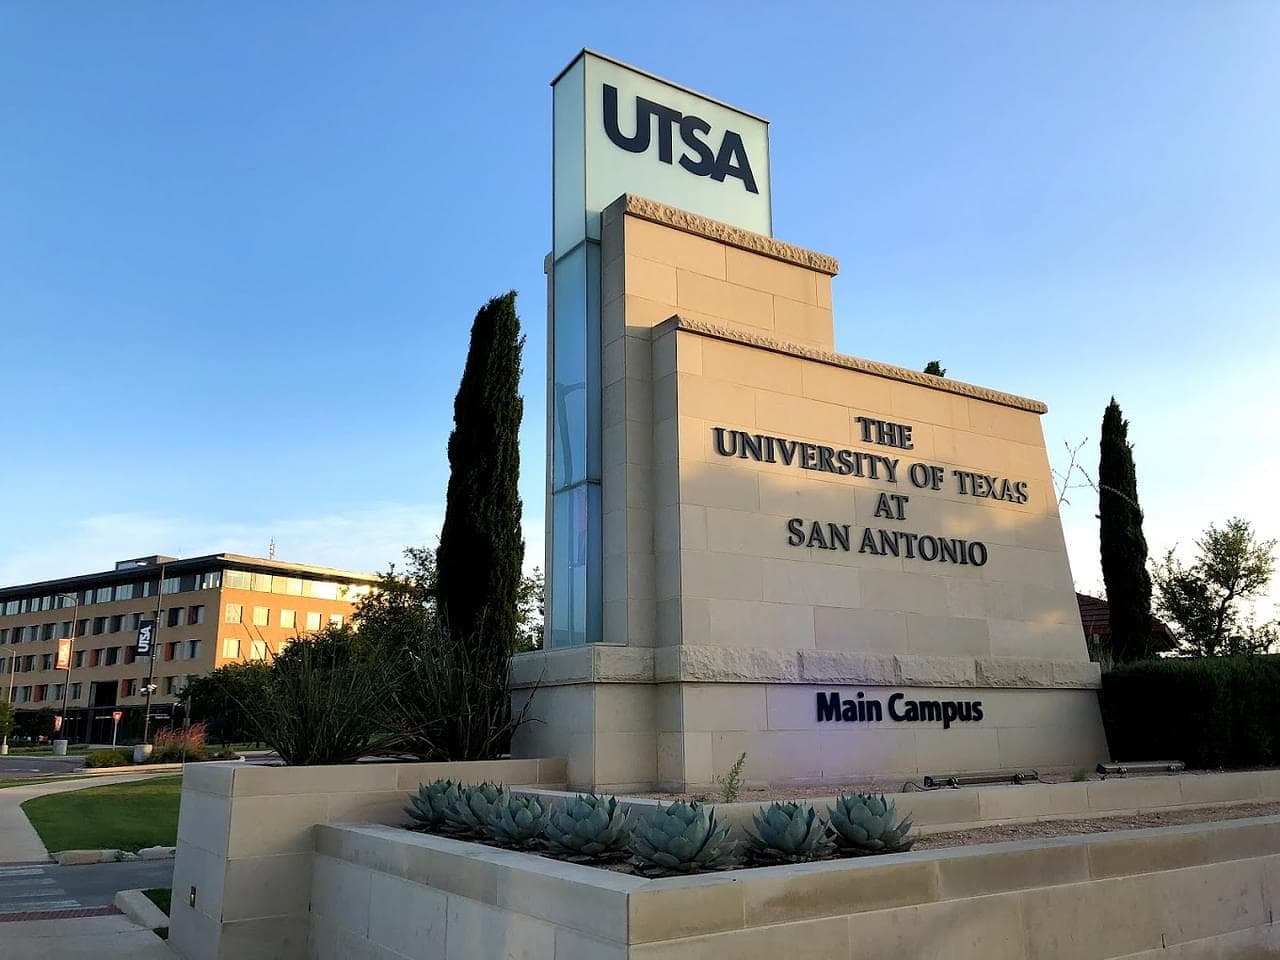 The University of Texas at San Antonio Featured Image